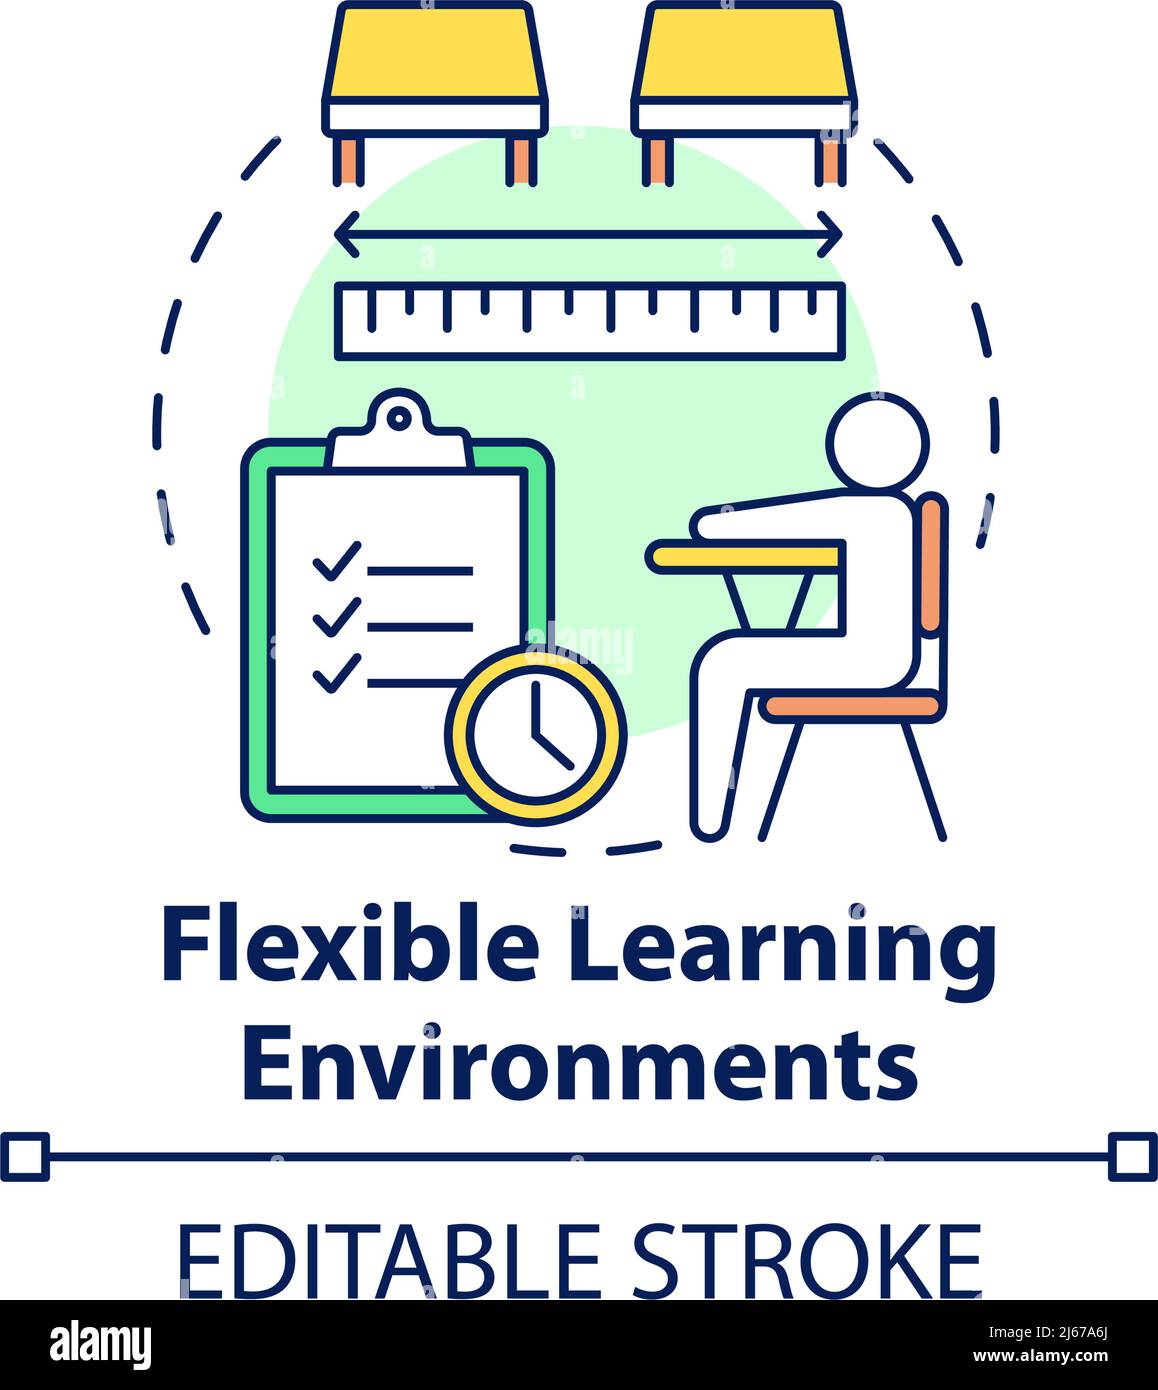 Flexible learning environments concept icon Stock Vector